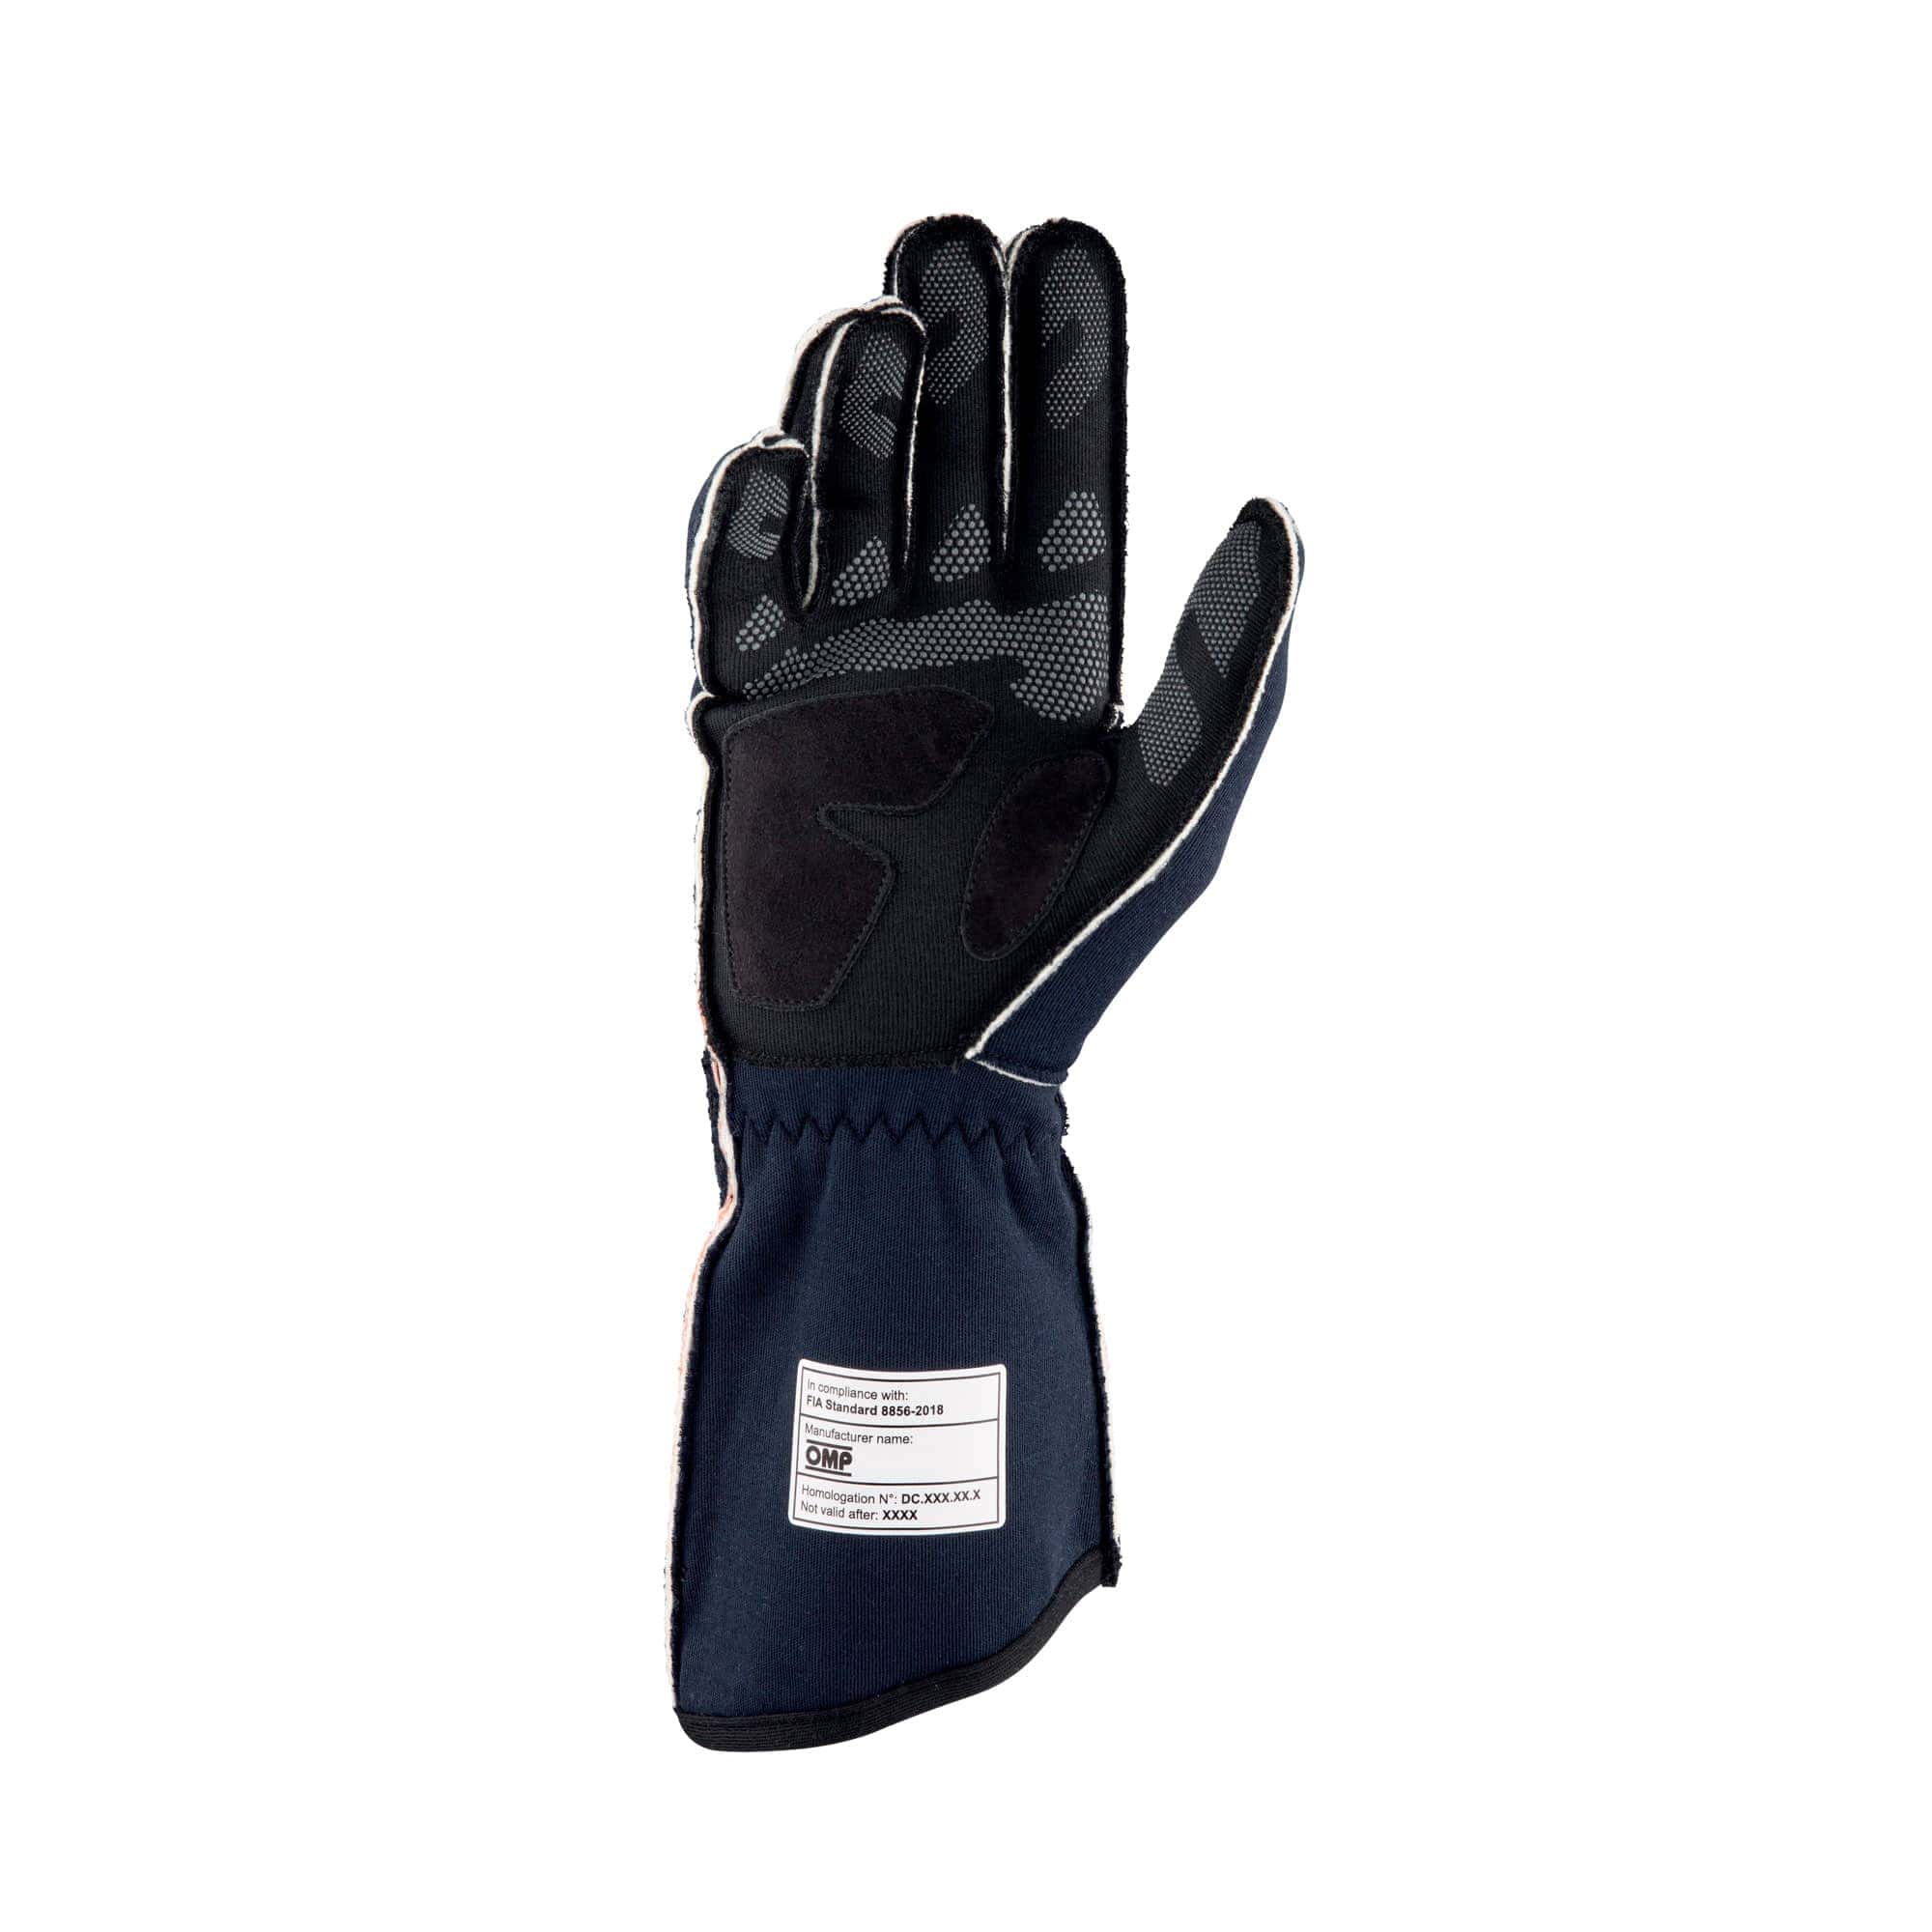 Guanti-Tecnica-Gloves-Omp-Blu-Navy-Ciano-IB-772-BC-rear